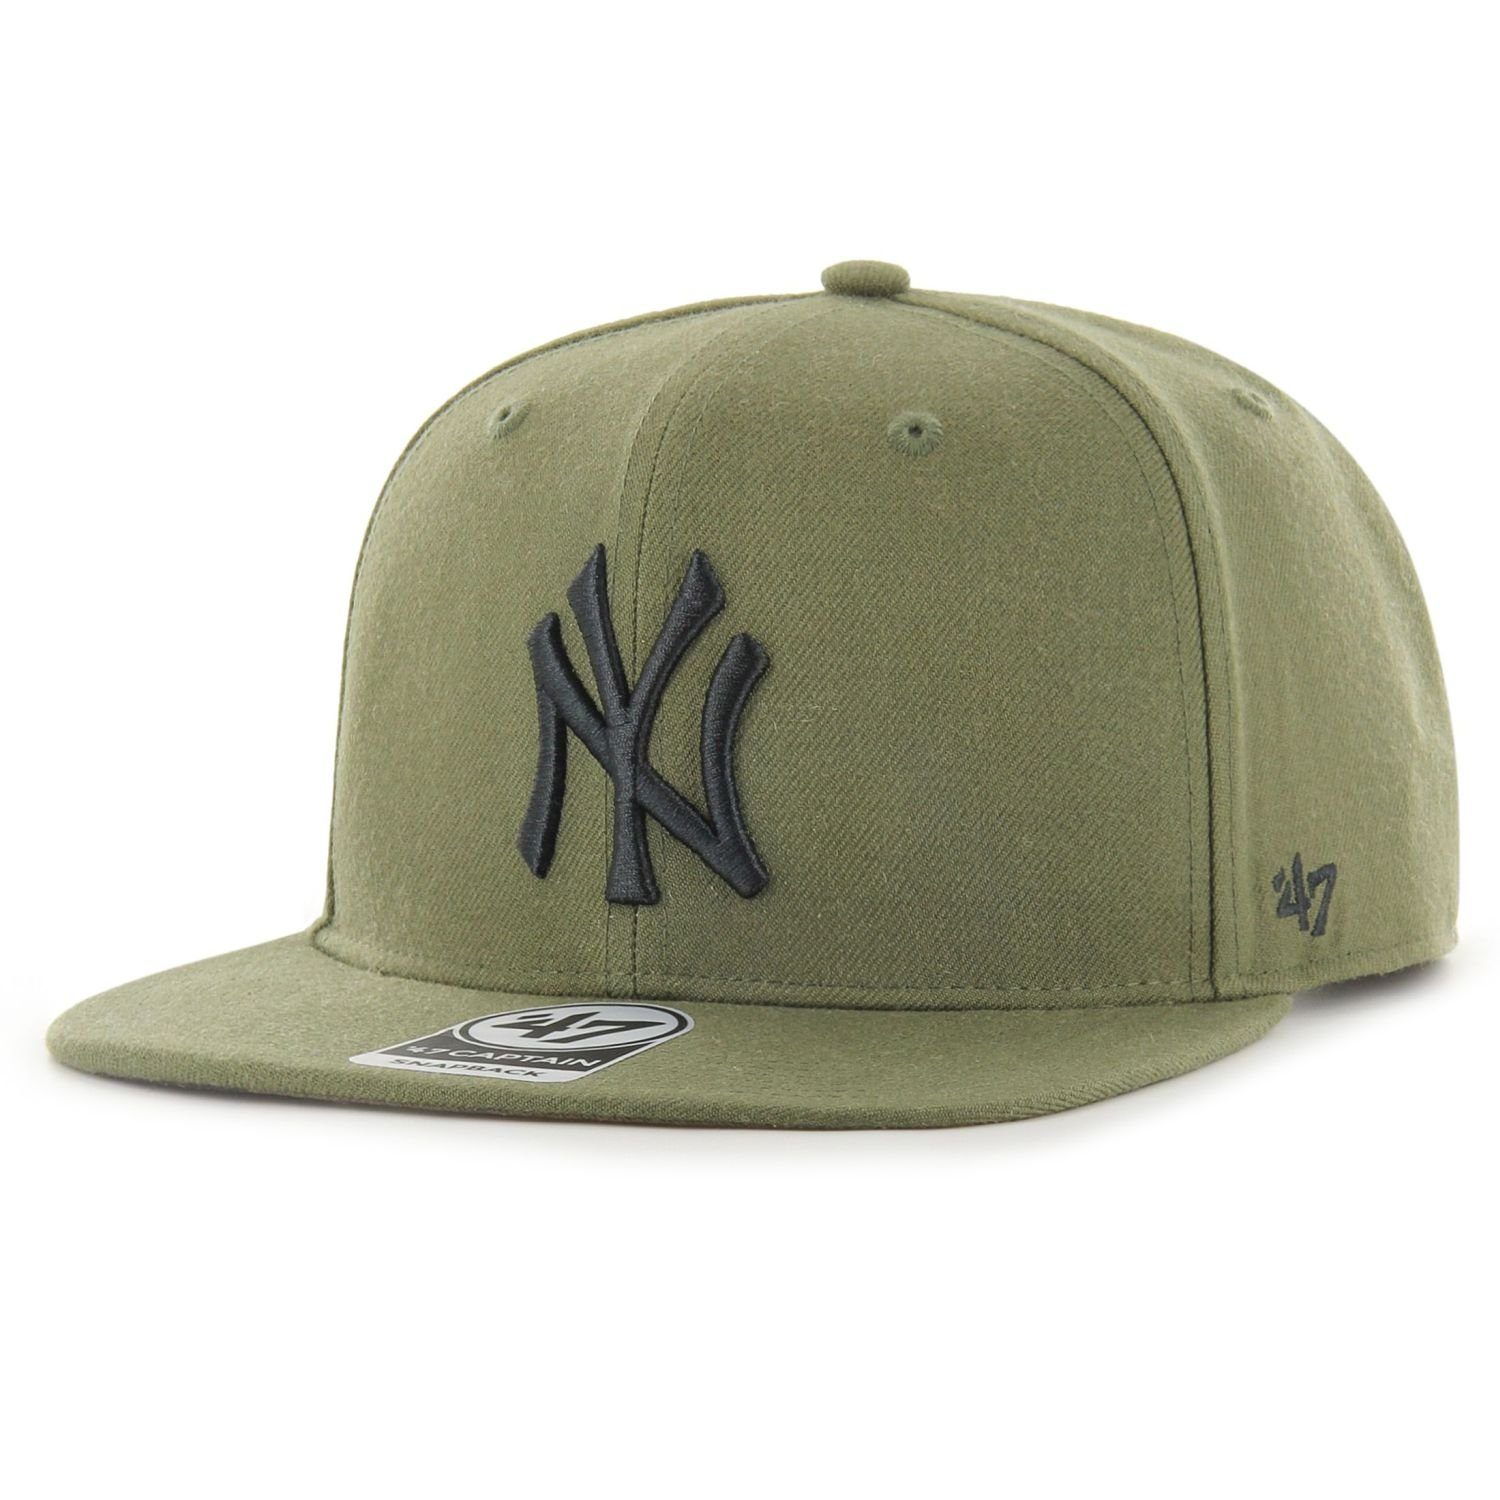 '47 Brand Snapback Cap CAPTAIN New York Yankees